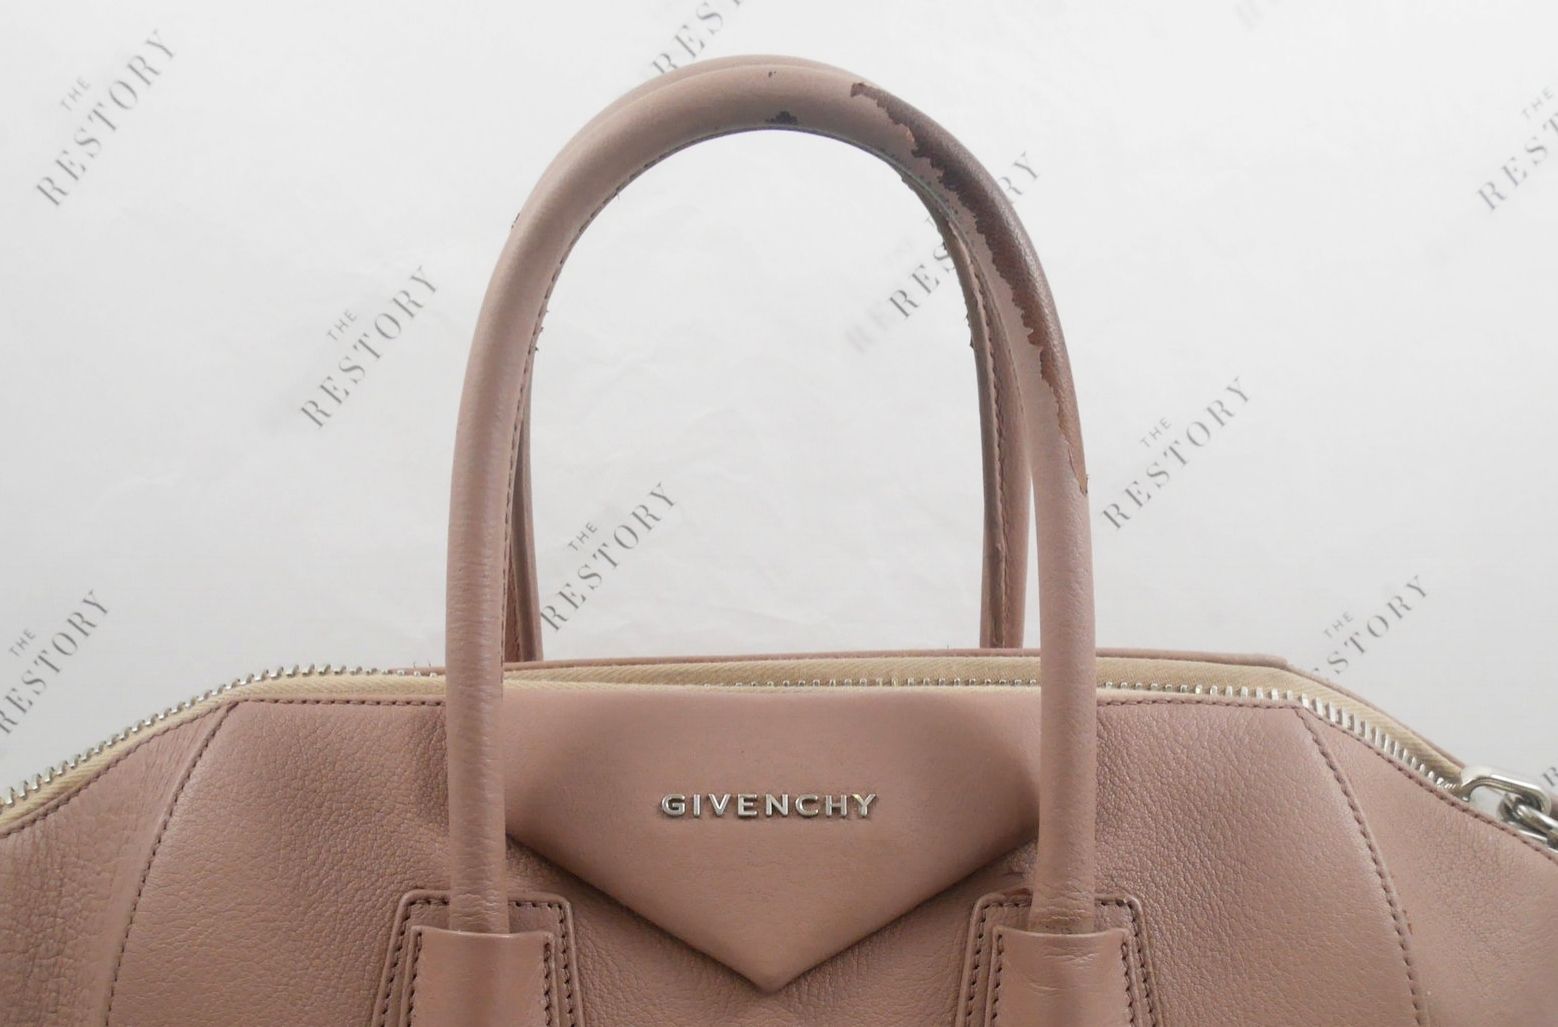 Givenchy Antigona Medium Bag Review + What's in my Bag?! 